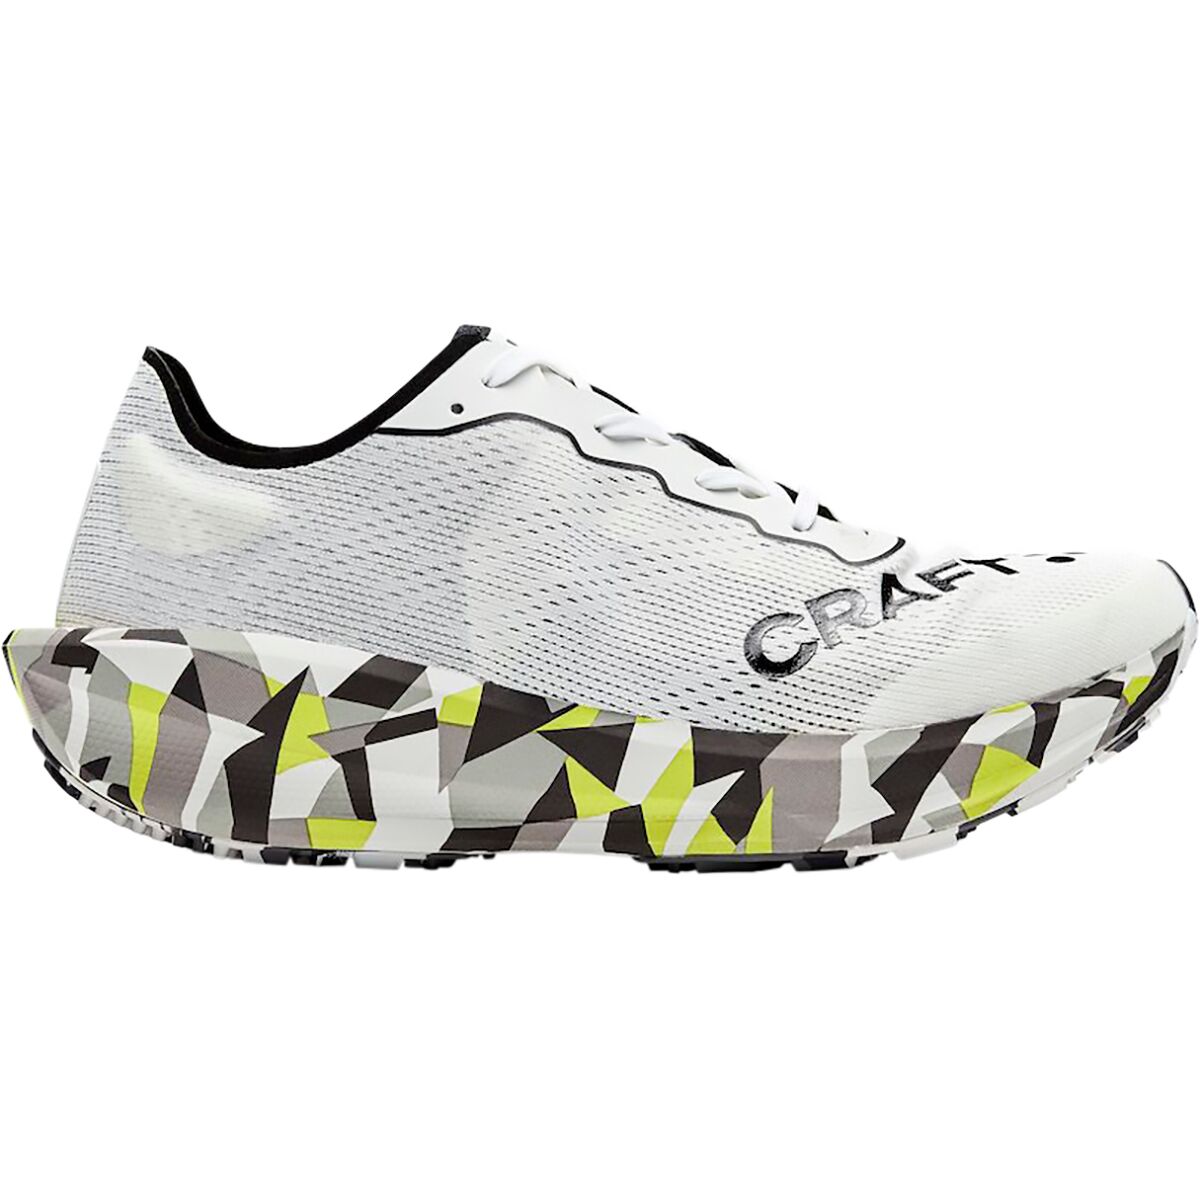 Craft CTM Ultra Carbon 2 Running Shoe - Men's